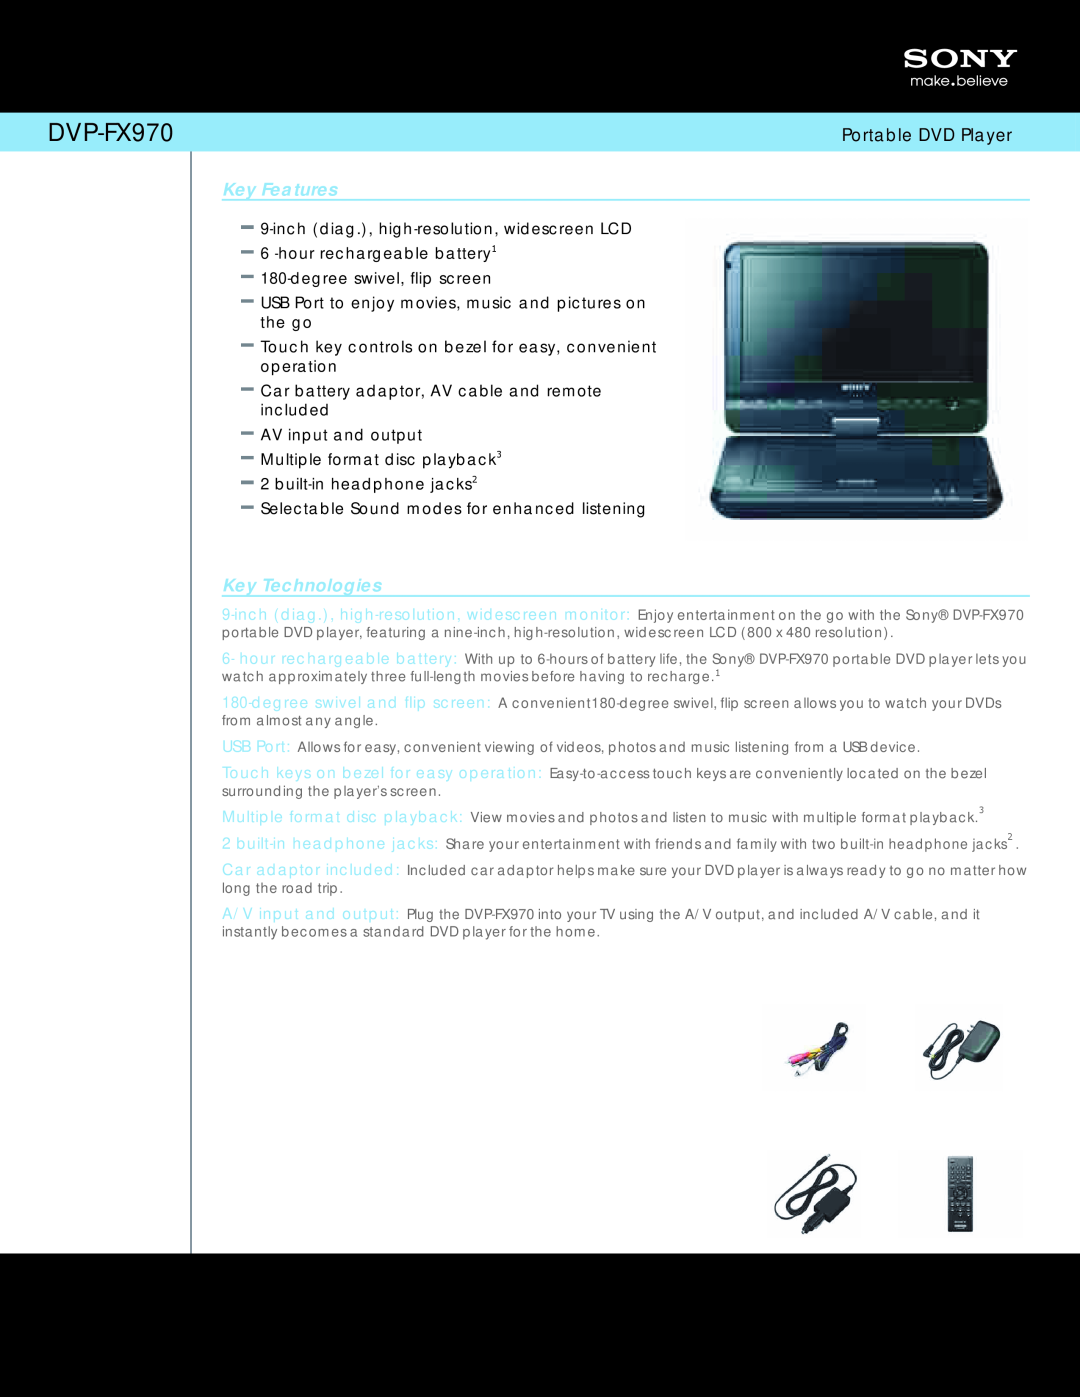 Sony DVP-FX970 manual Portable DVD Player, Key Features, Key Technologies, degree swivel, flip screen 